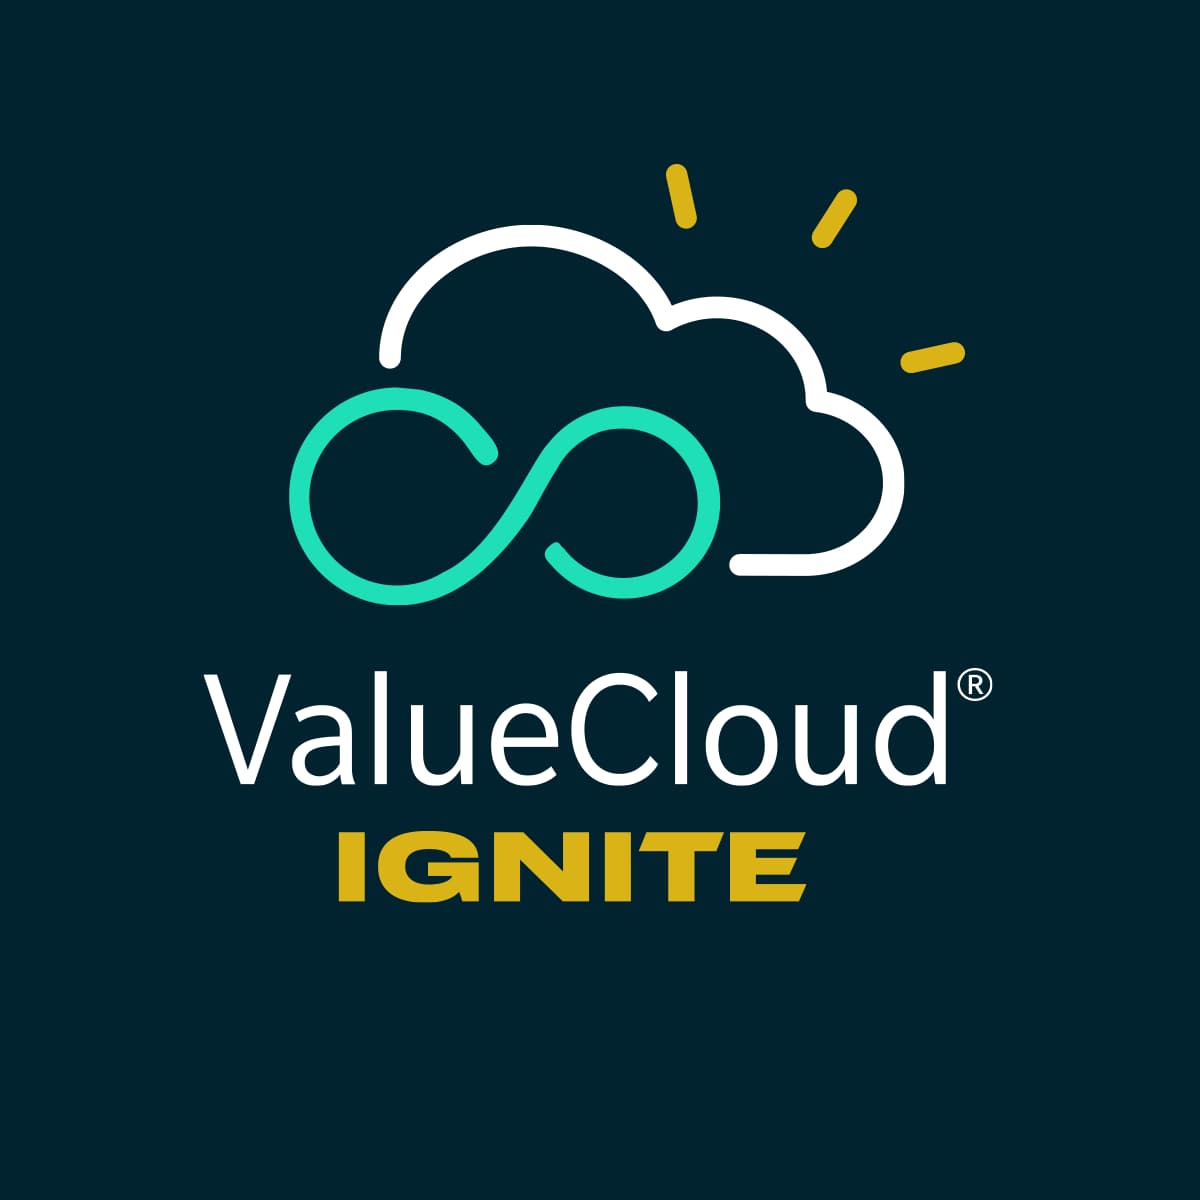 ValueCloud_Ignite_logo copy